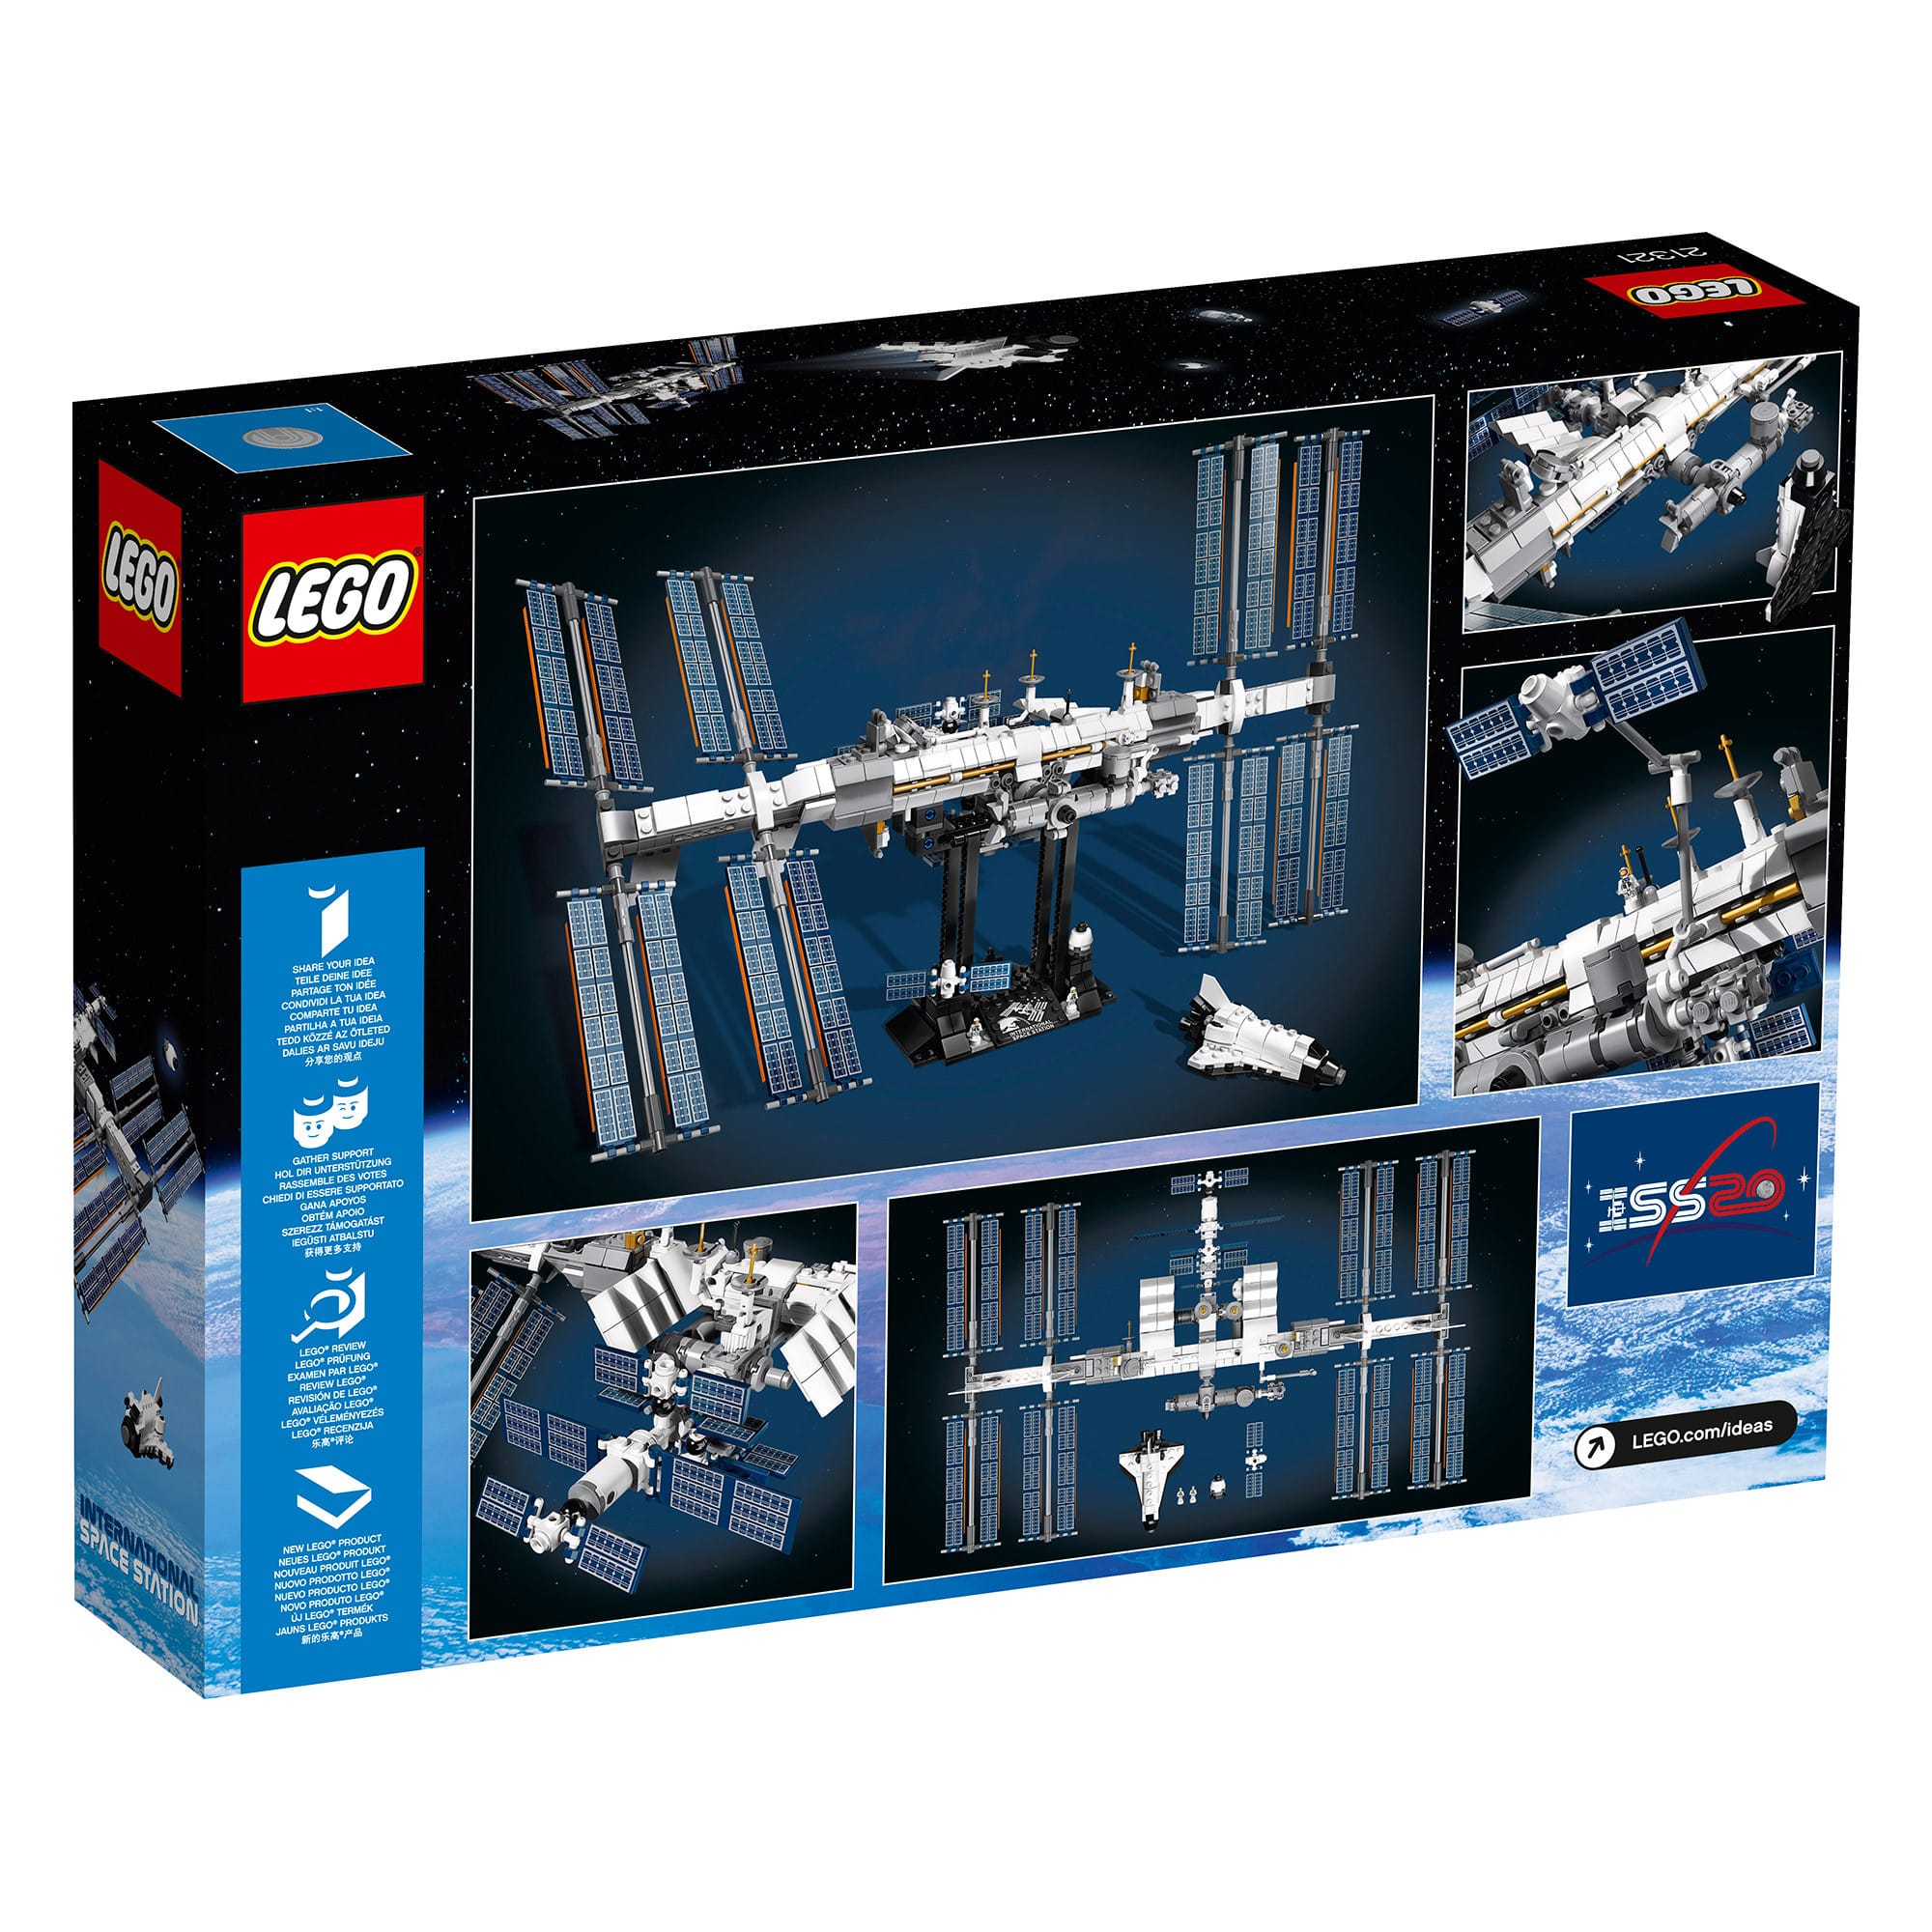 LEGO - Ideas - 21321 International Space Station